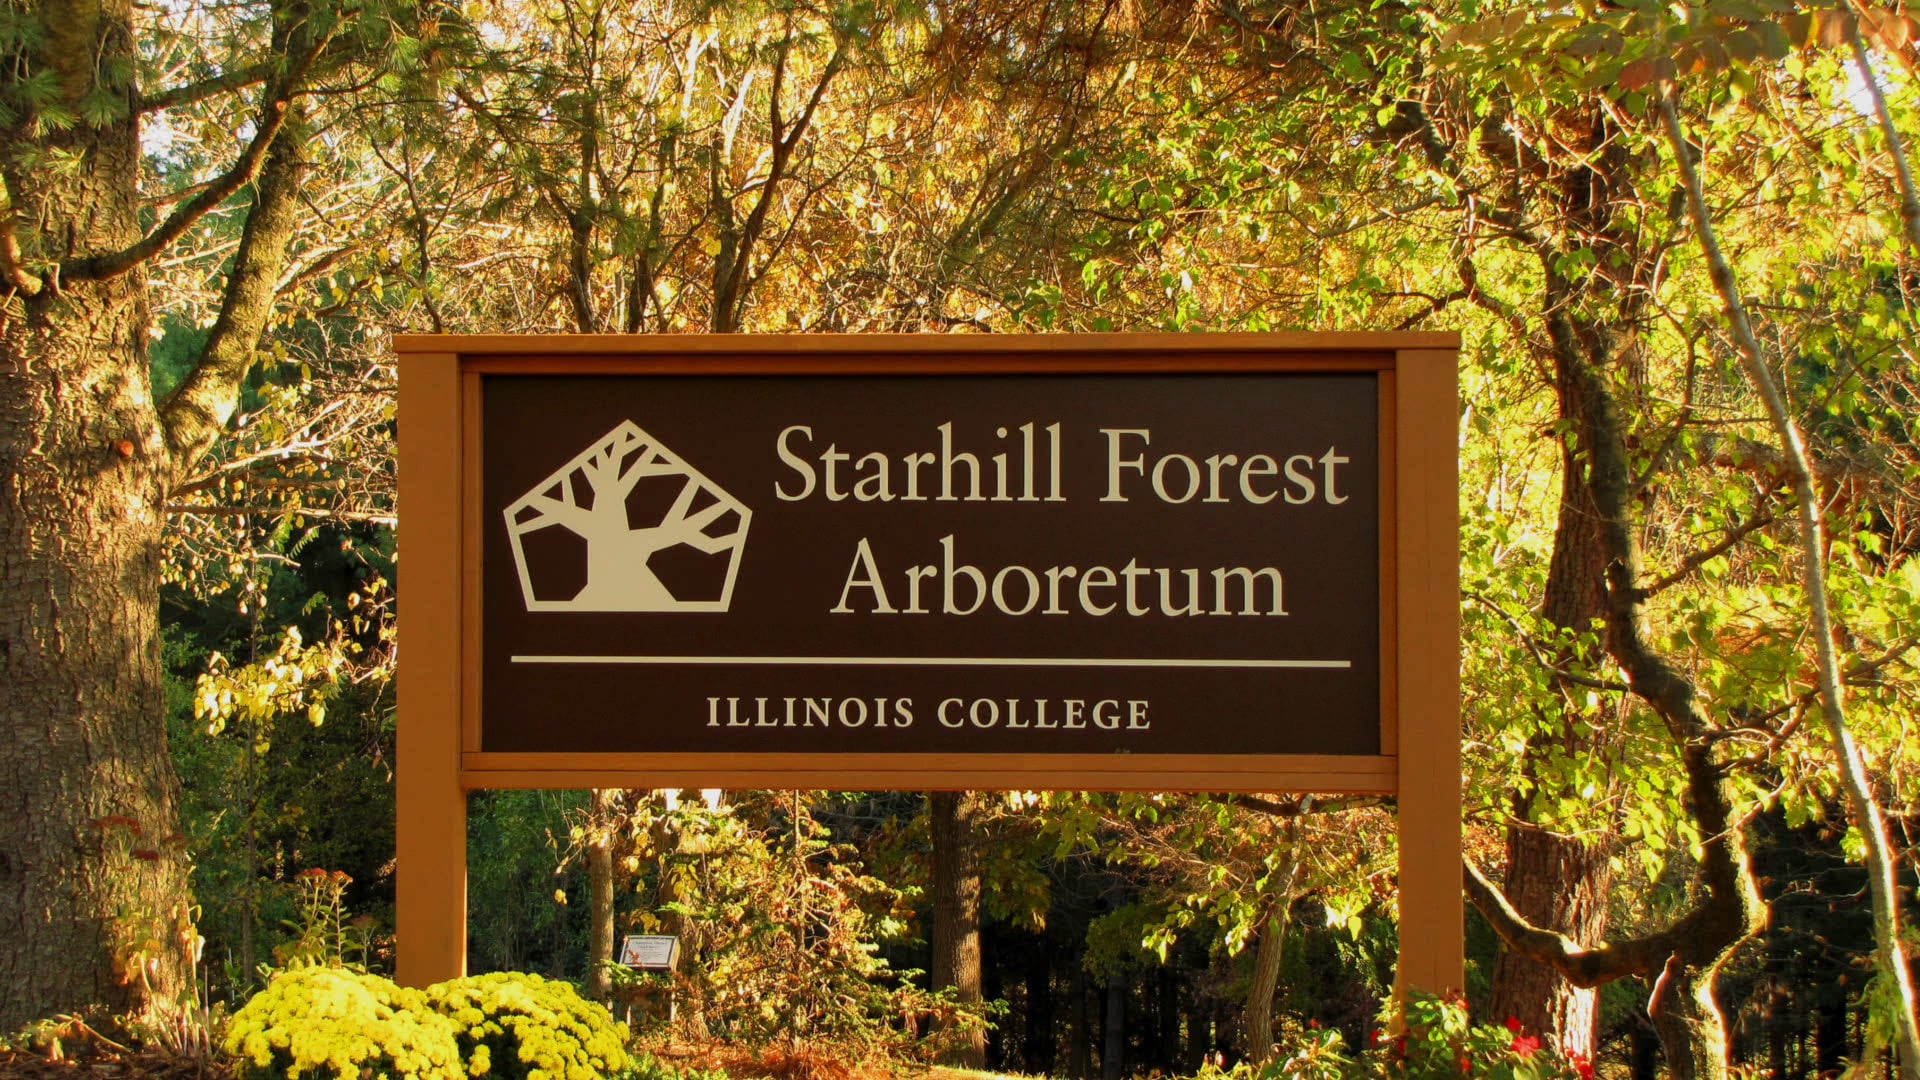 Starhill Forest Arboretum - A Quick Tour